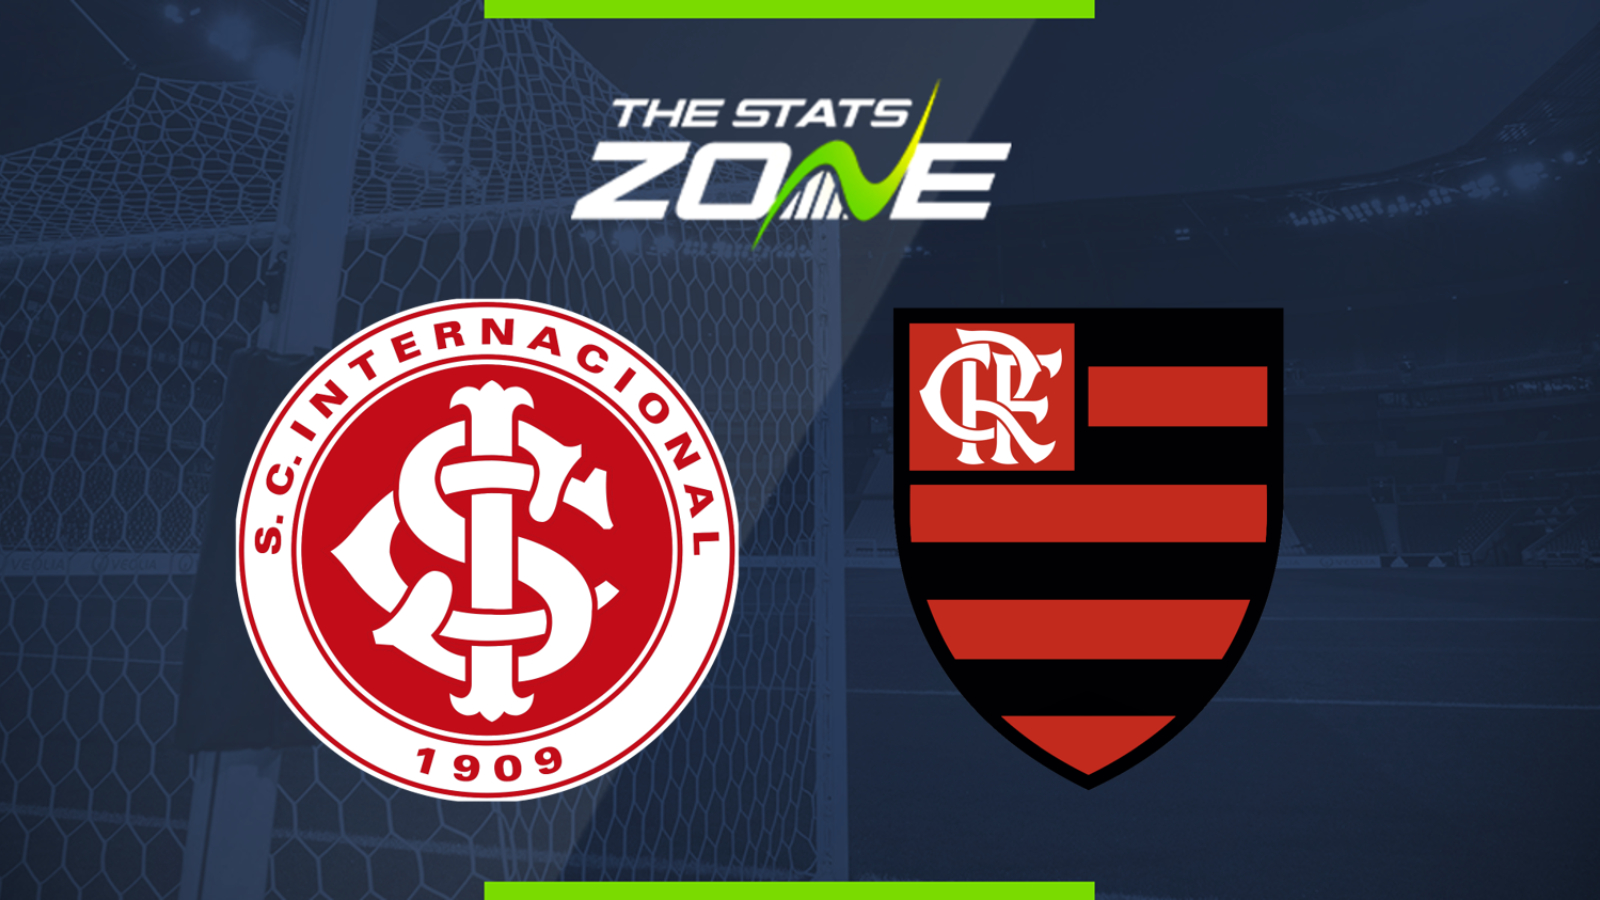 19 Copa Libertadores Internacional Vs Flamengo Preview Prediction The Stats Zone